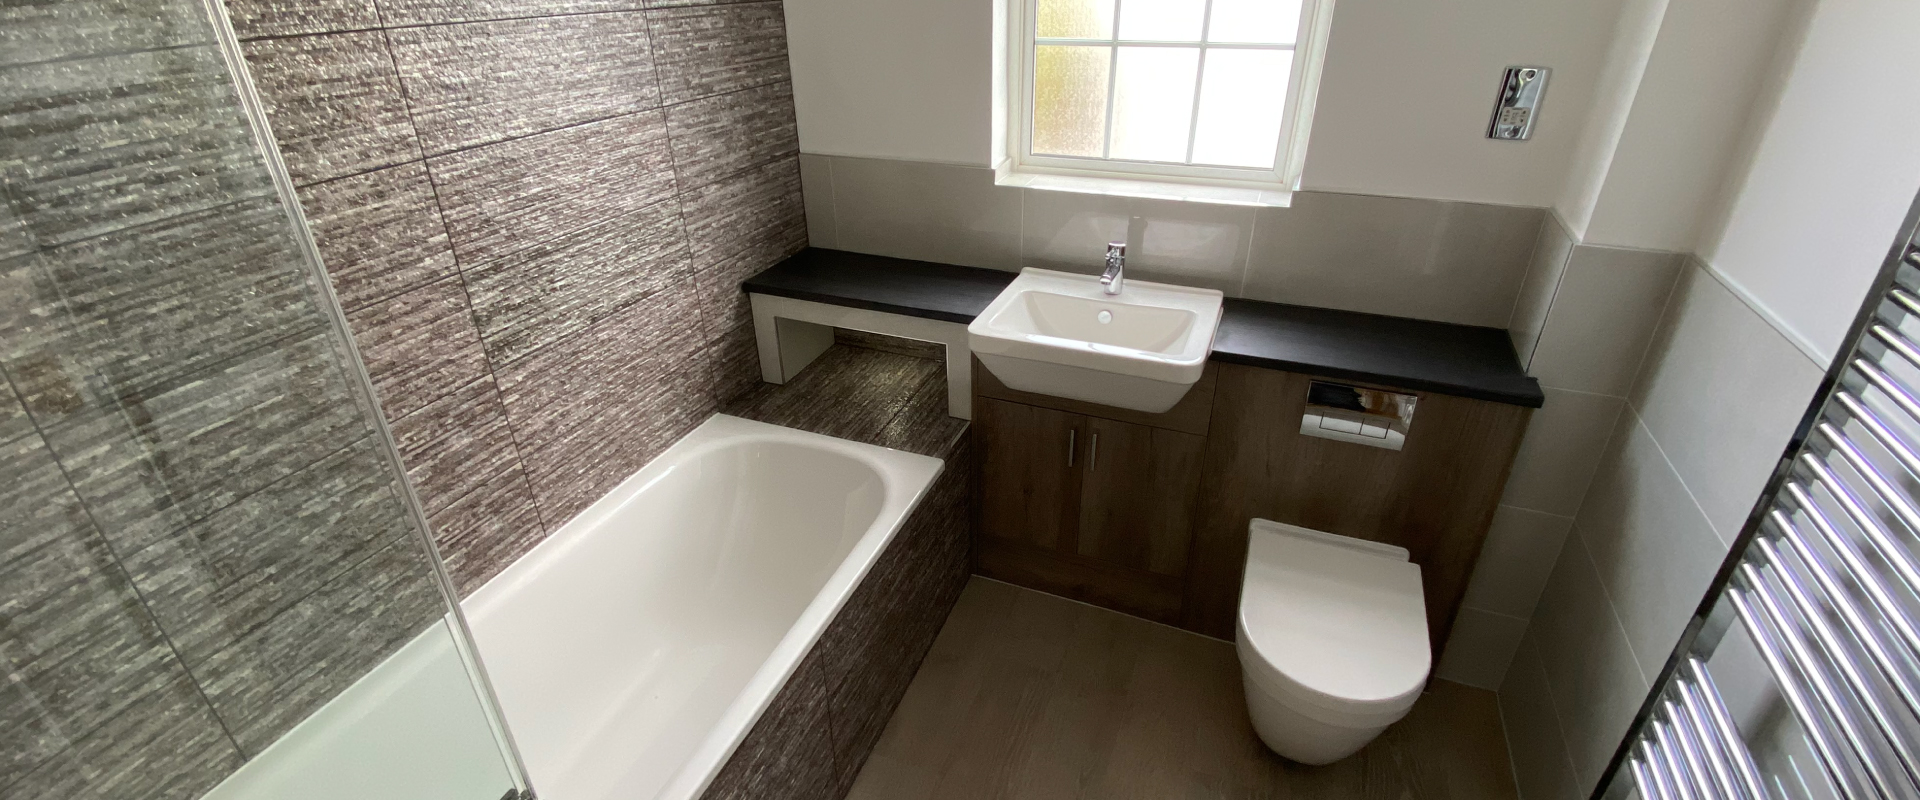 Bathroom design and installation in Gerrards Cross